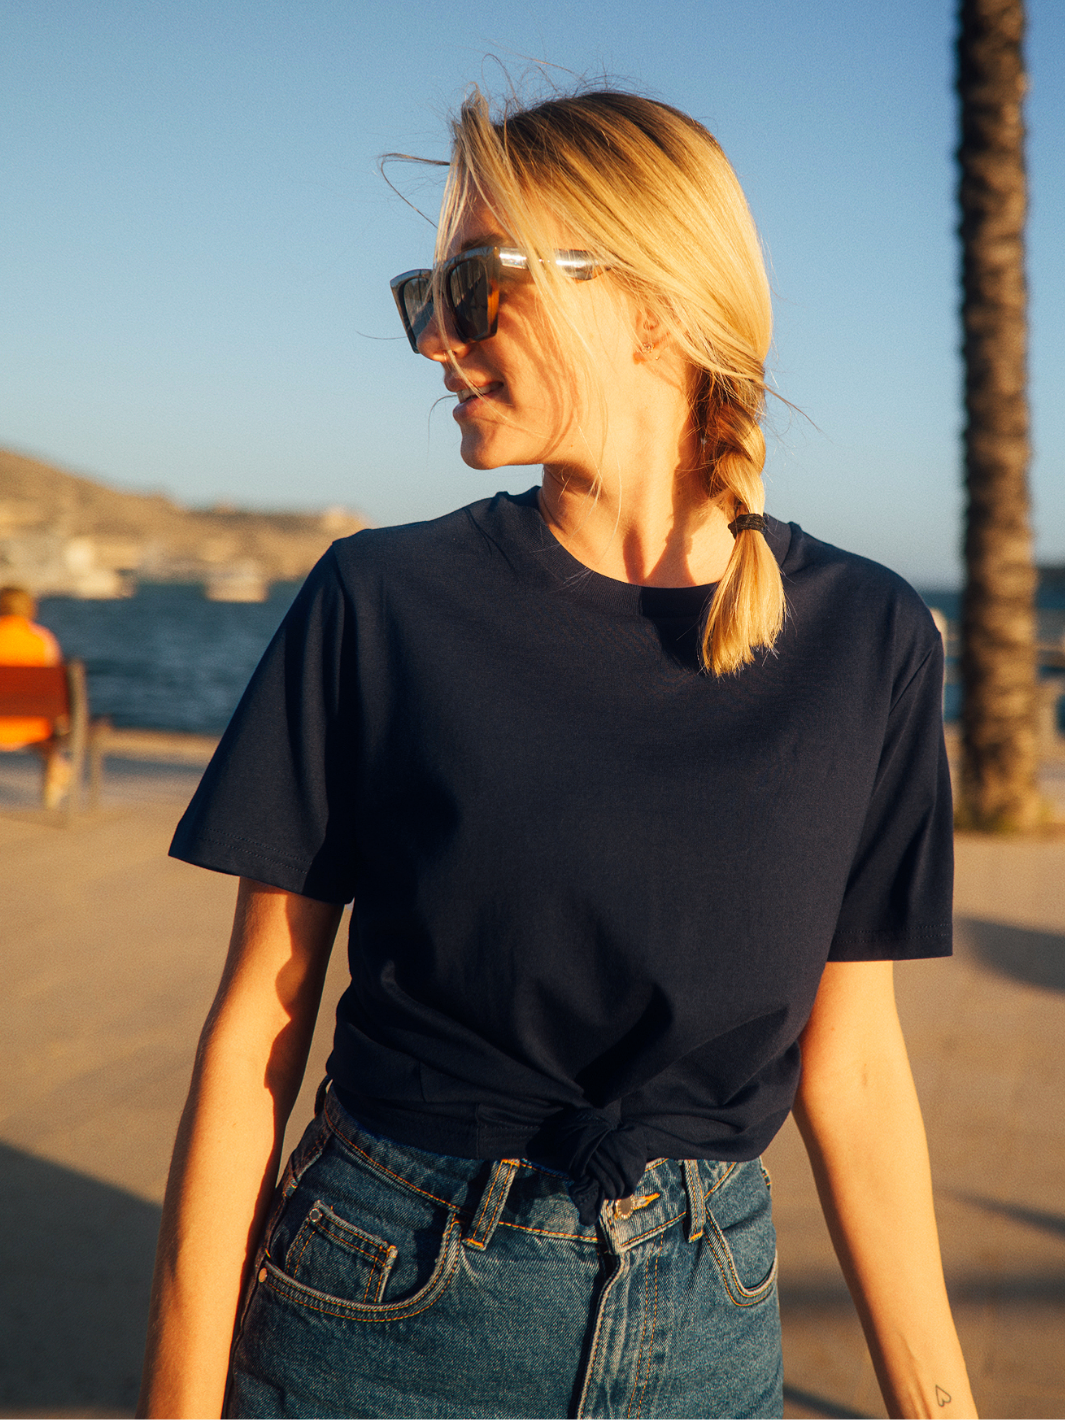 3er-Pack – Damen Basic T-Shirt Essential | Navy blau